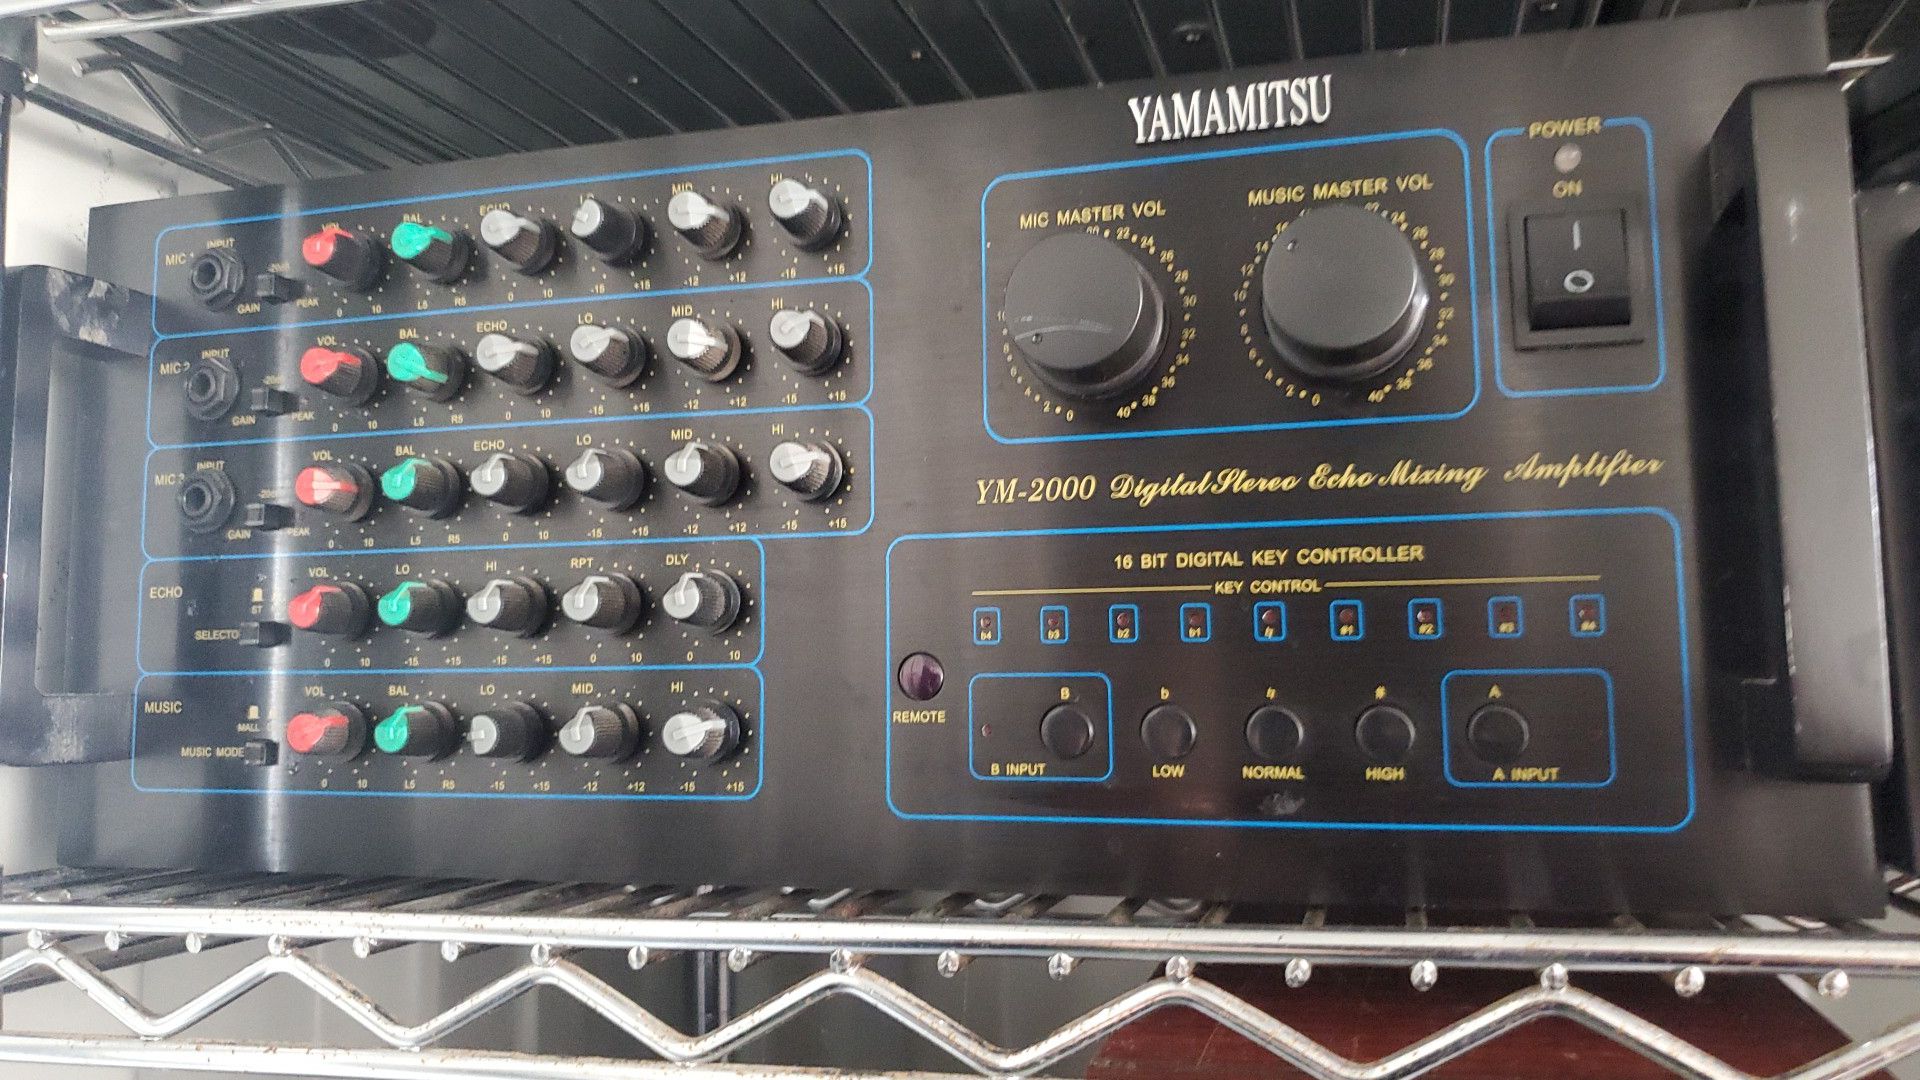 Yamamitsu YM 2000 Digital Sterio Echo Mixing Amplifier